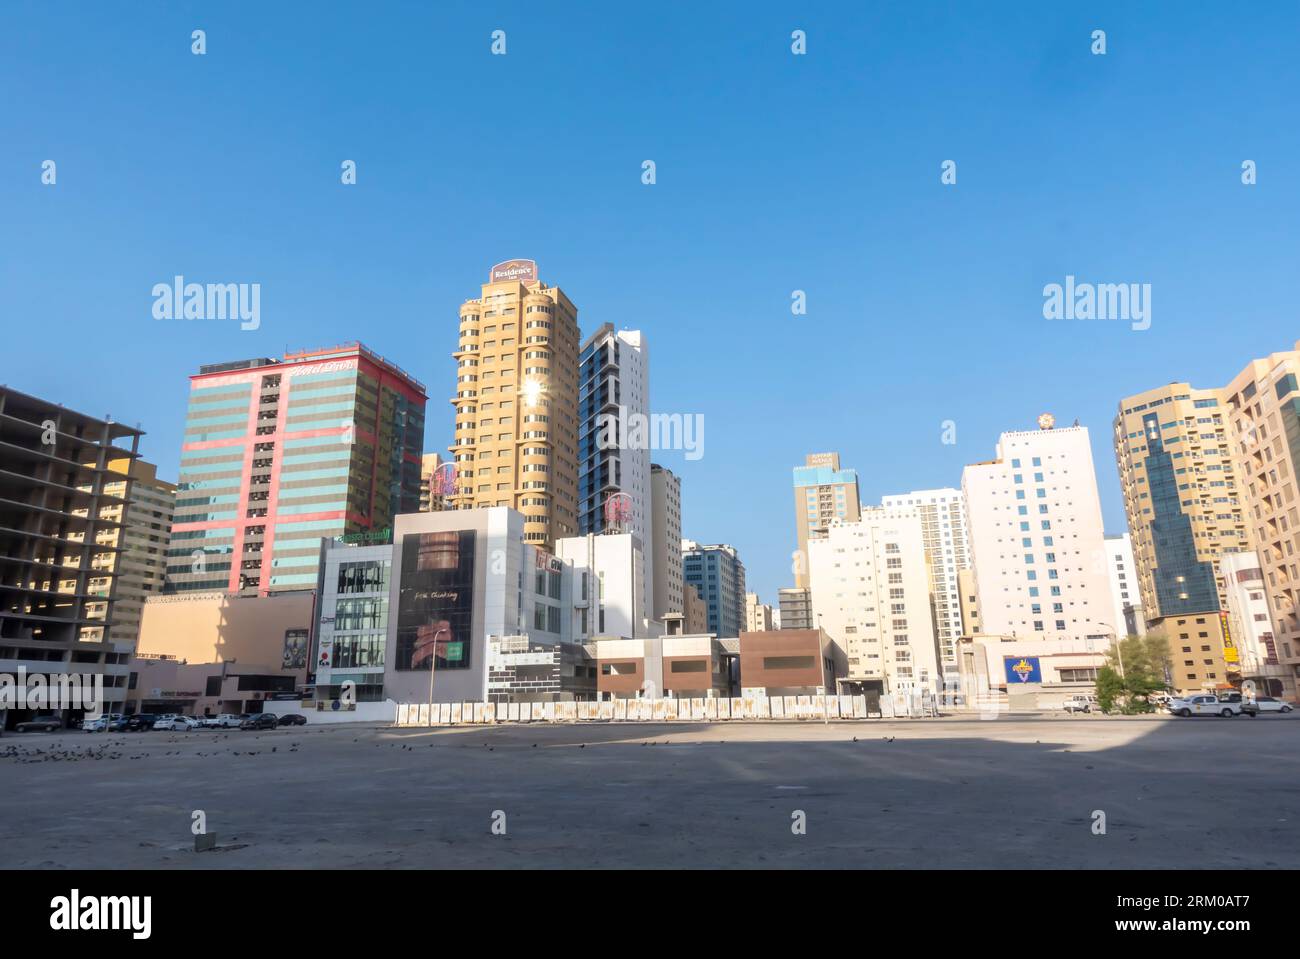 Hotels in Jaffair Bahrain - Stadtentwicklung, Baugebiet, Hospitality Buildings in Bahrain Stockfoto